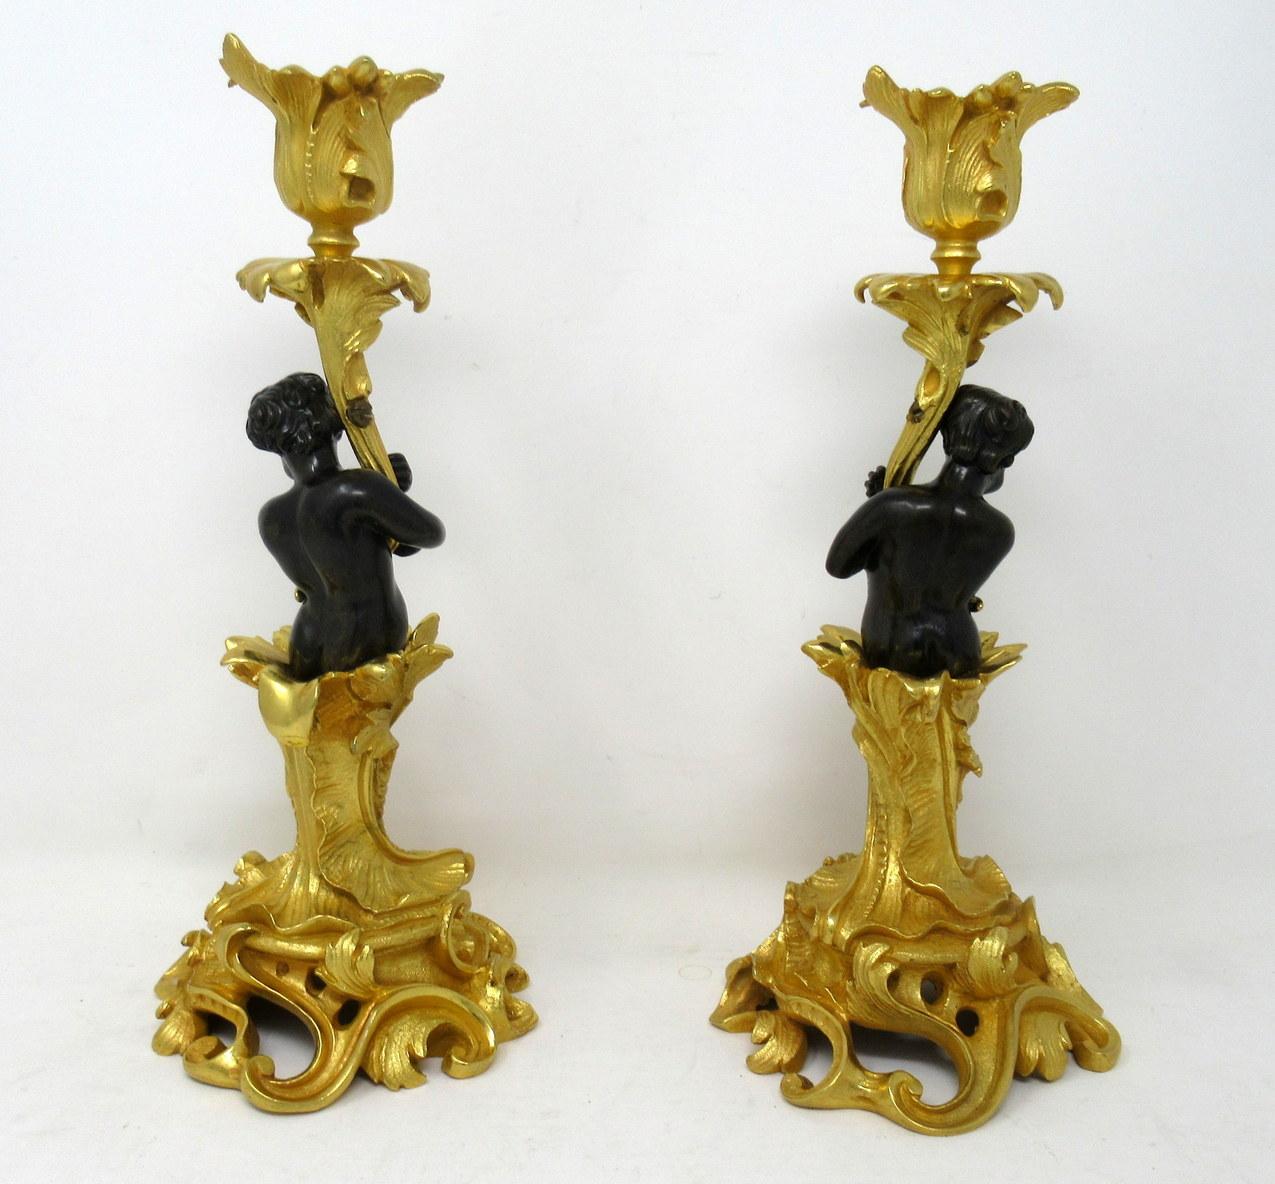 Antique Vintage Pair of French Ormolu Gilt Bronze Candelabra Candlesticks 2